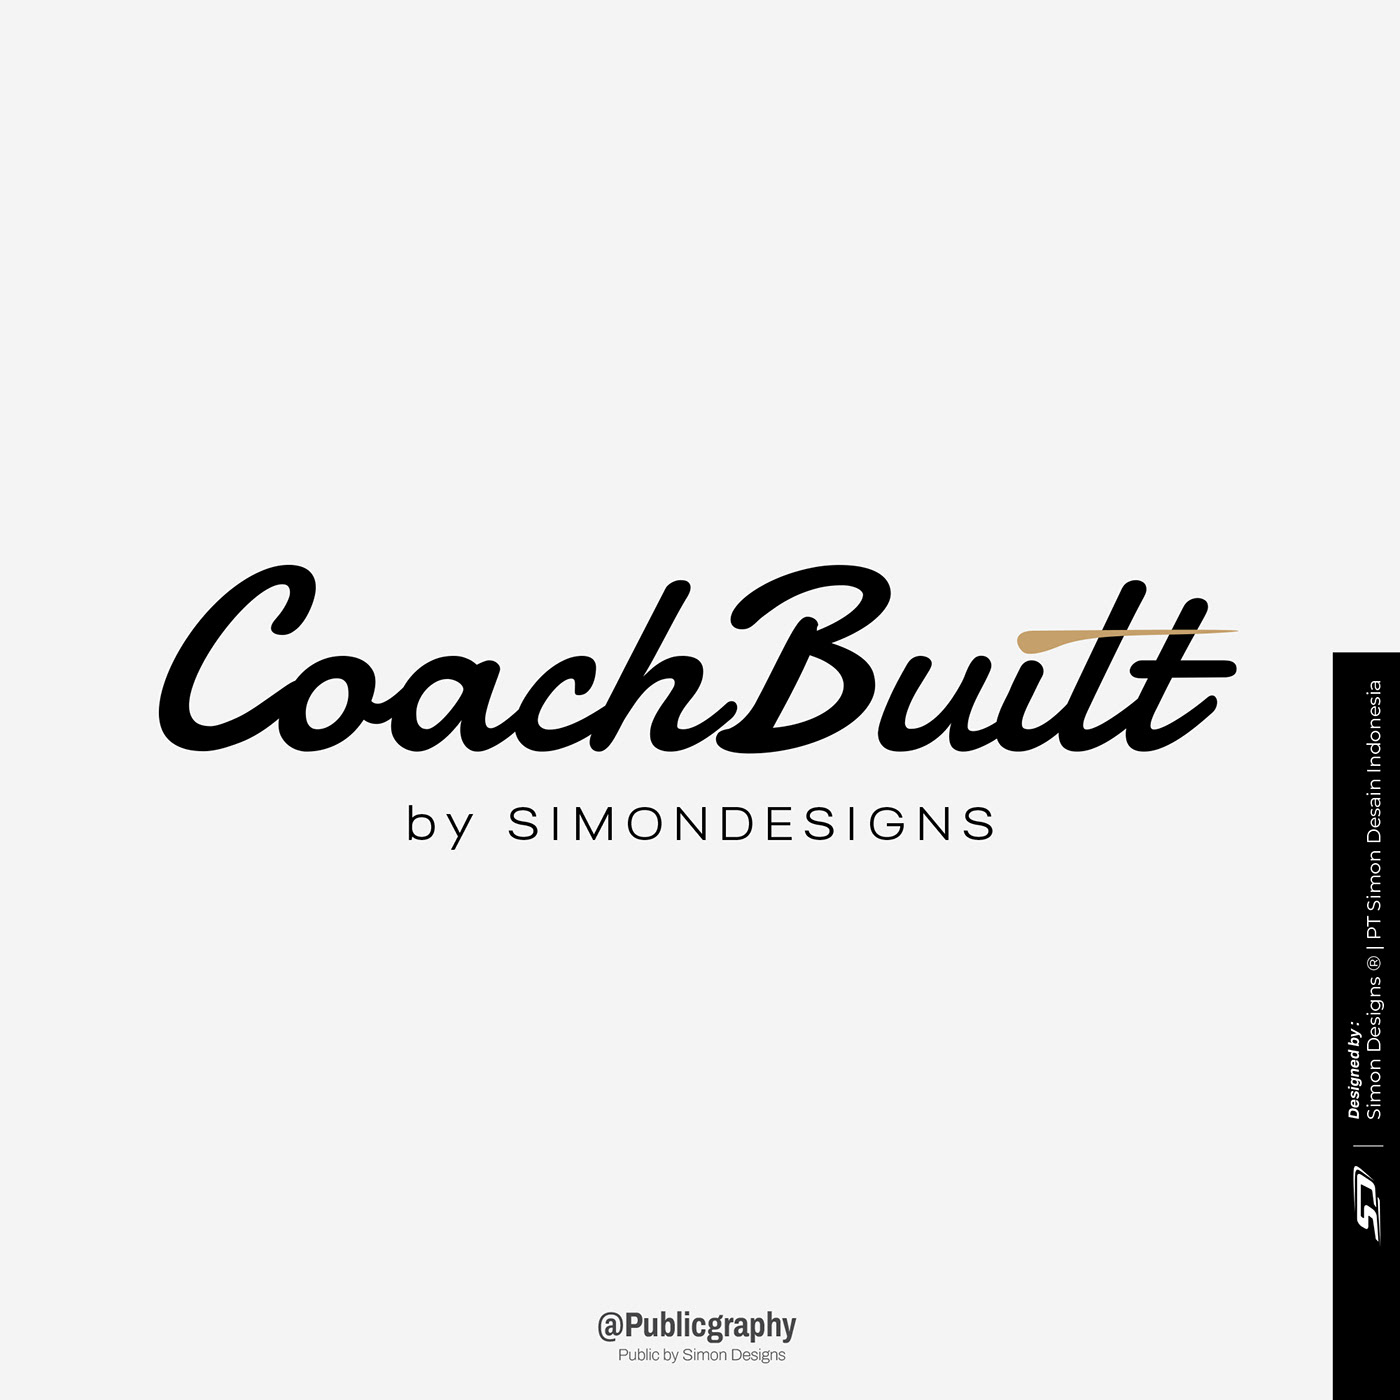 Simon Designs designer Logo Design branding  graphic design  coach built